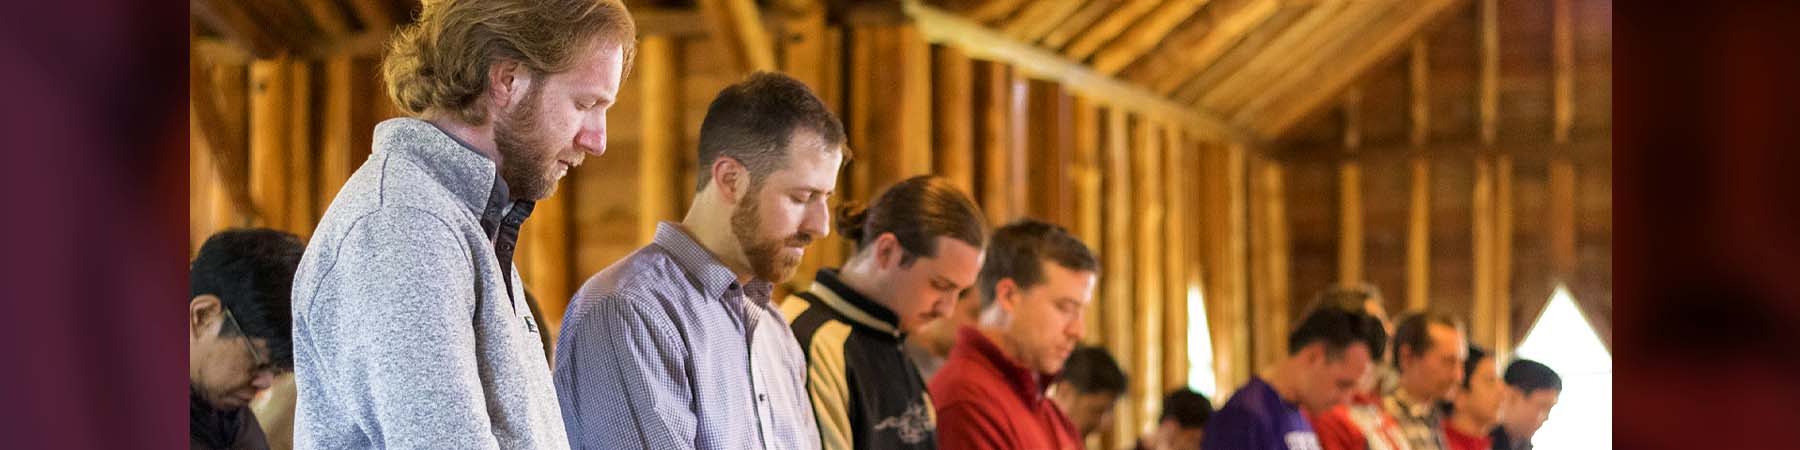 First Studies men in prayer in chapel at Omena villa.